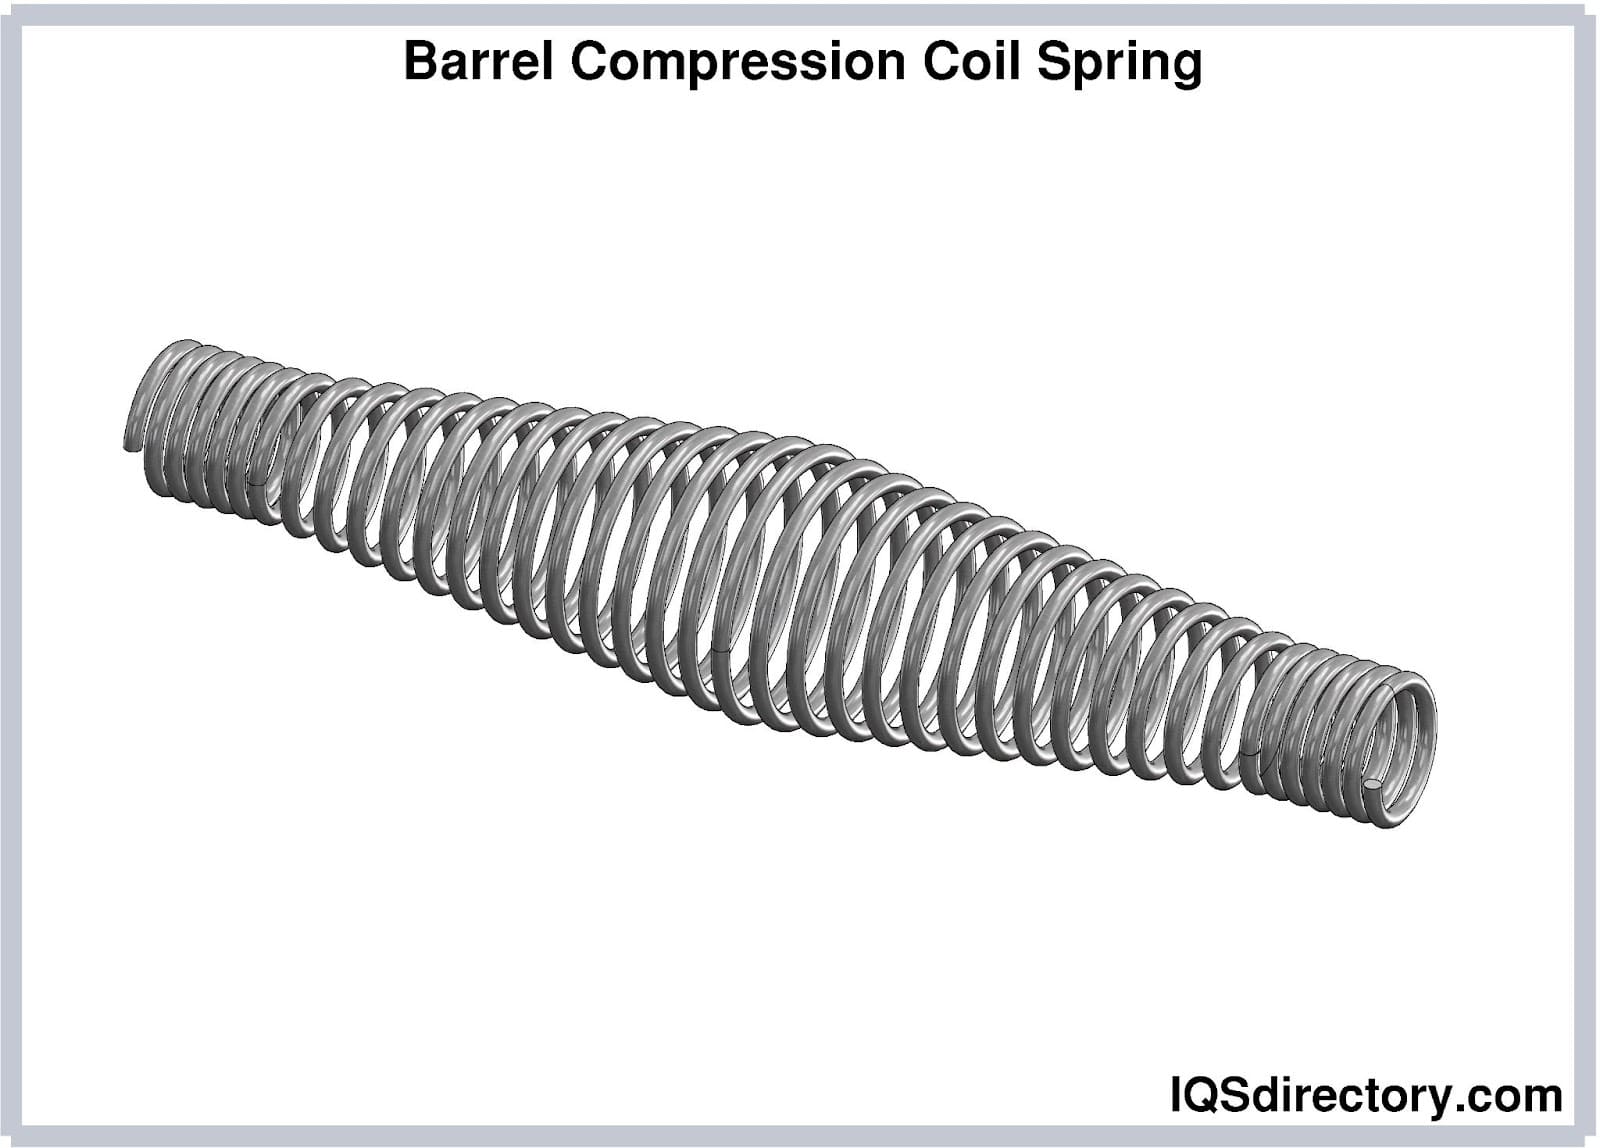 Barrel Compression Coil Spring